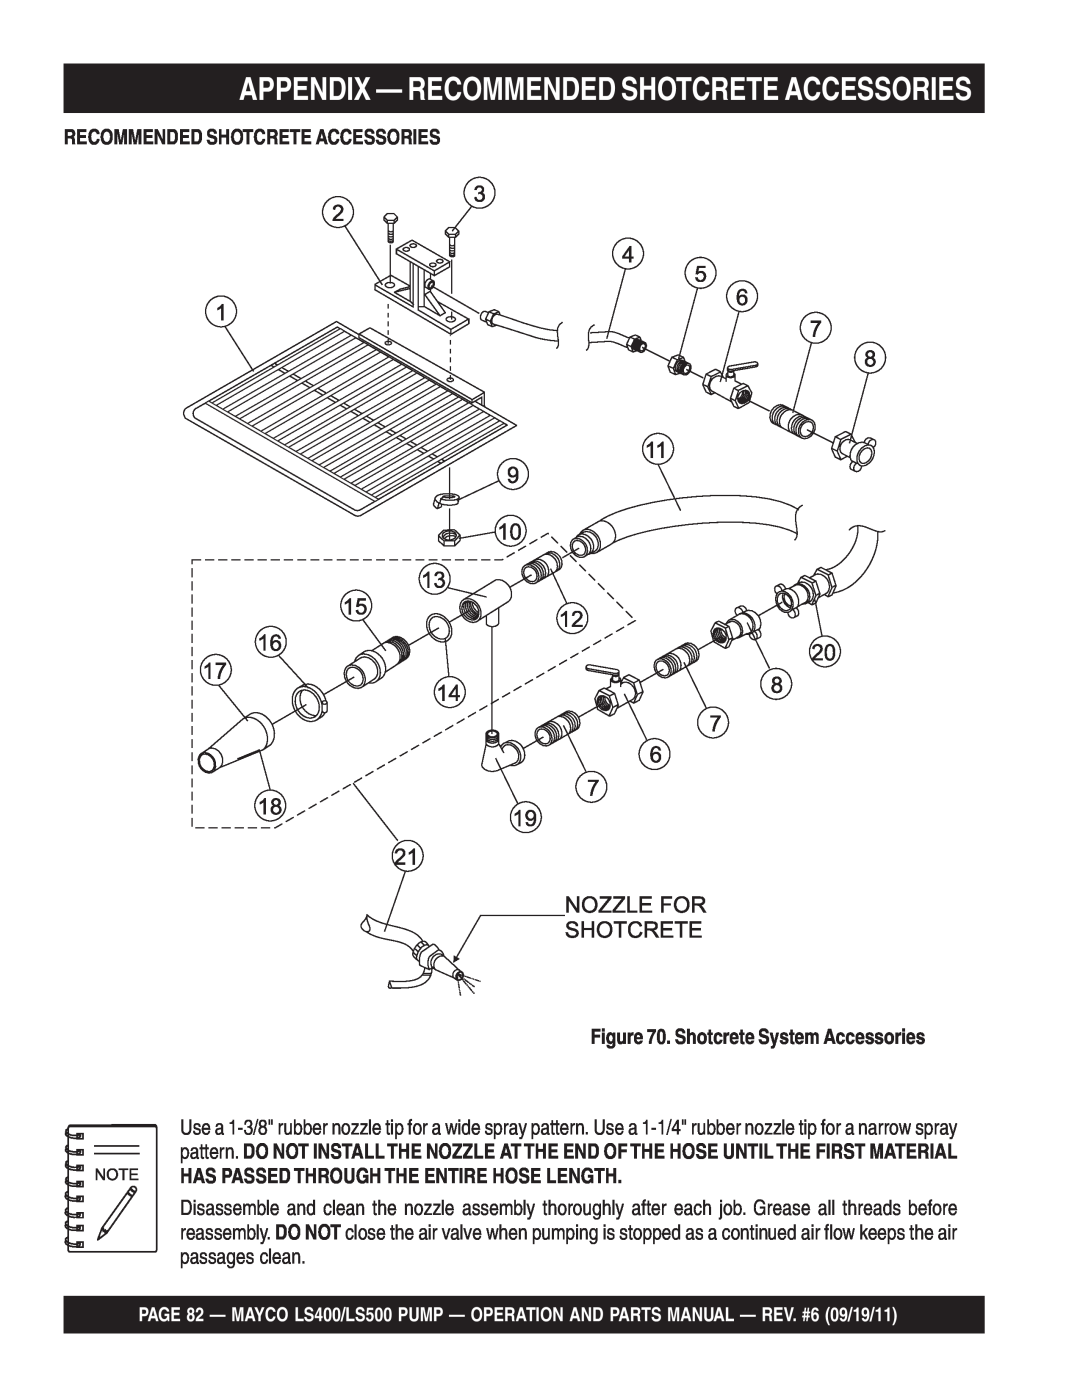 Multiquip LS400, LS500 manual Appendix - Recommended Shotcrete Accessories, Shotcrete System Accessories 